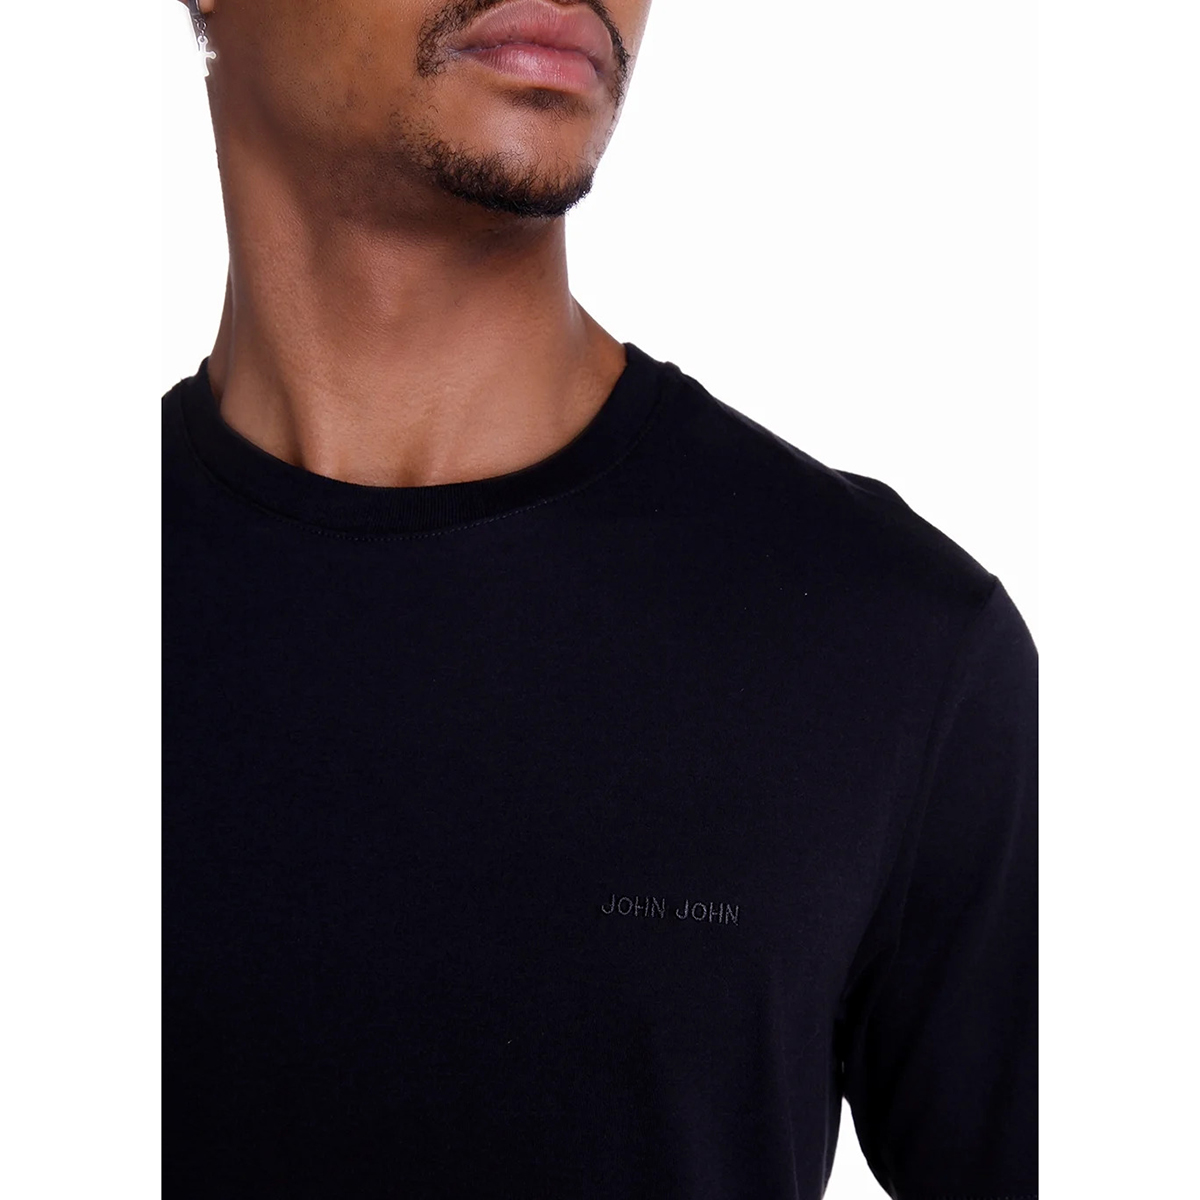 Camiseta John John Rg The Light Masculina - Tamanho Camiseta(p)  Cores(preto)